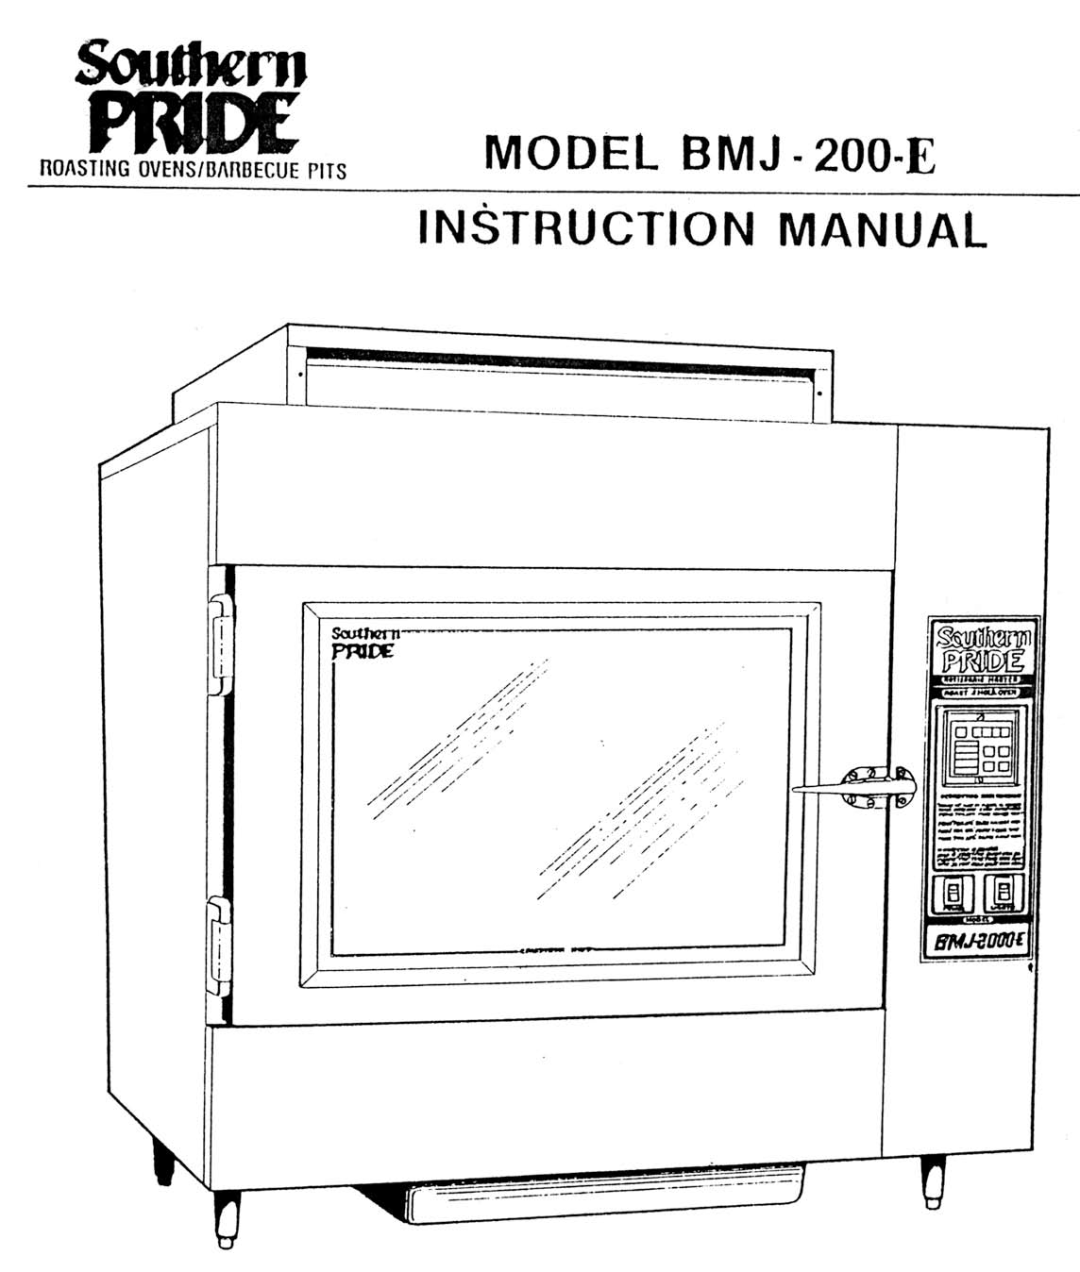 Southern Pride BMJ-200-E manual 